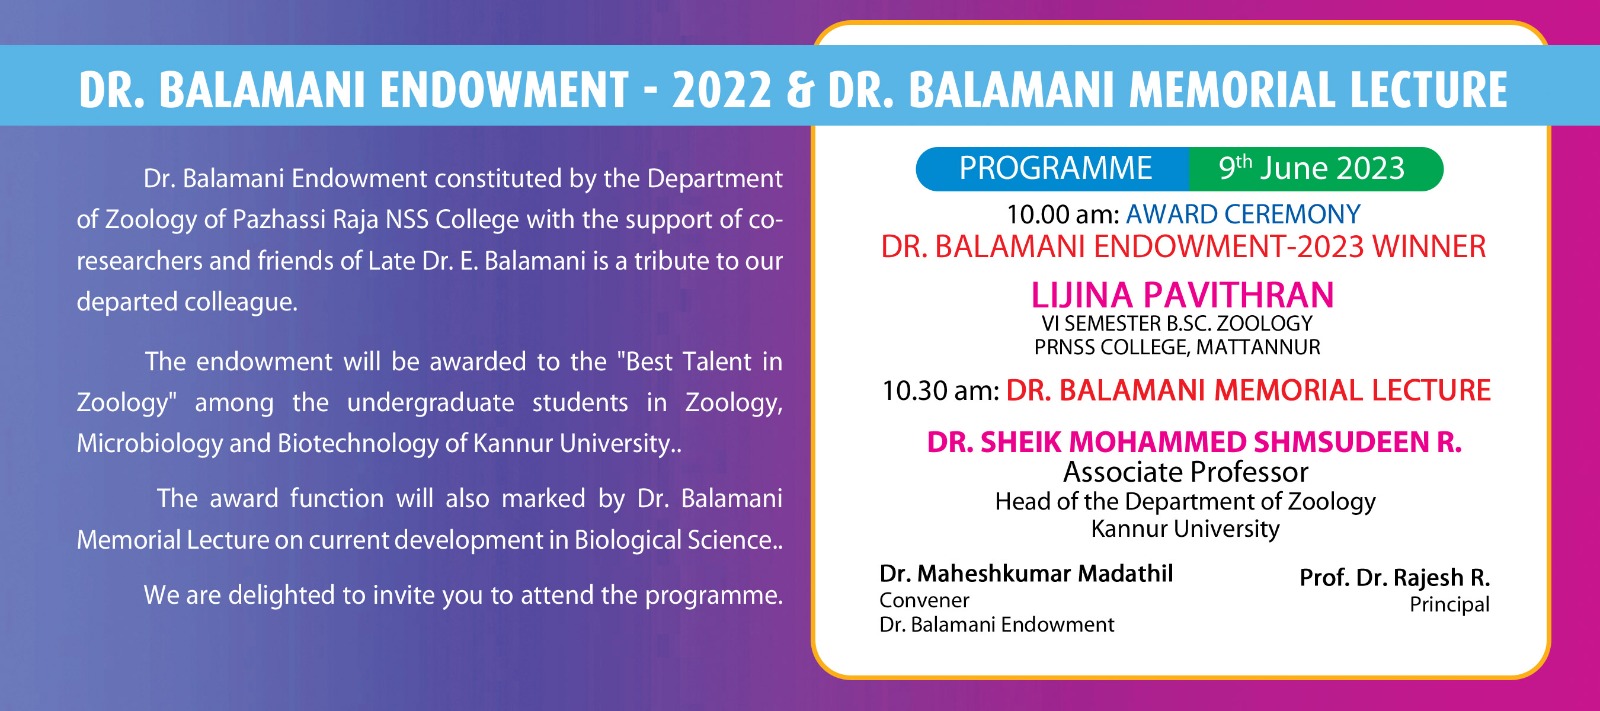 Dr. Balamani Endowment 2022